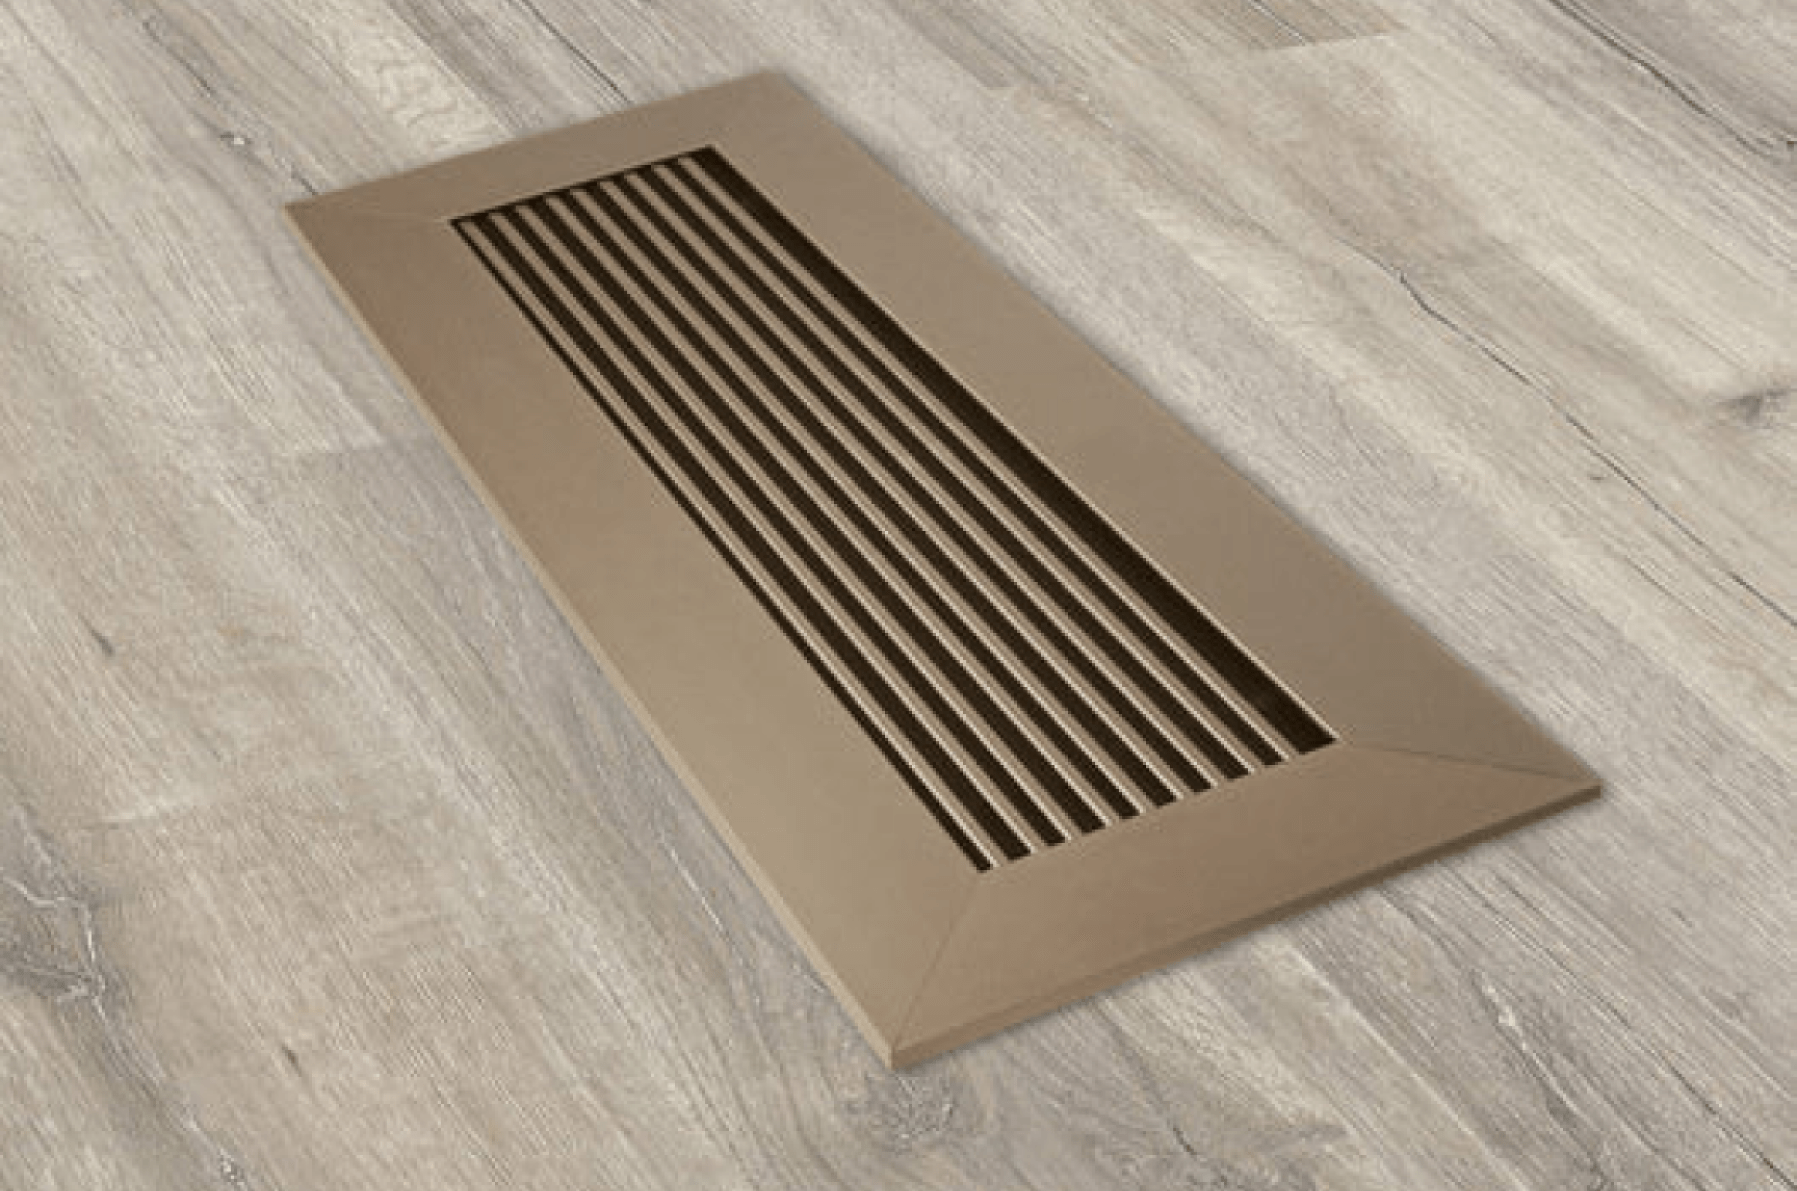 kul grilles anodized bronze vent cover on hardwood floor